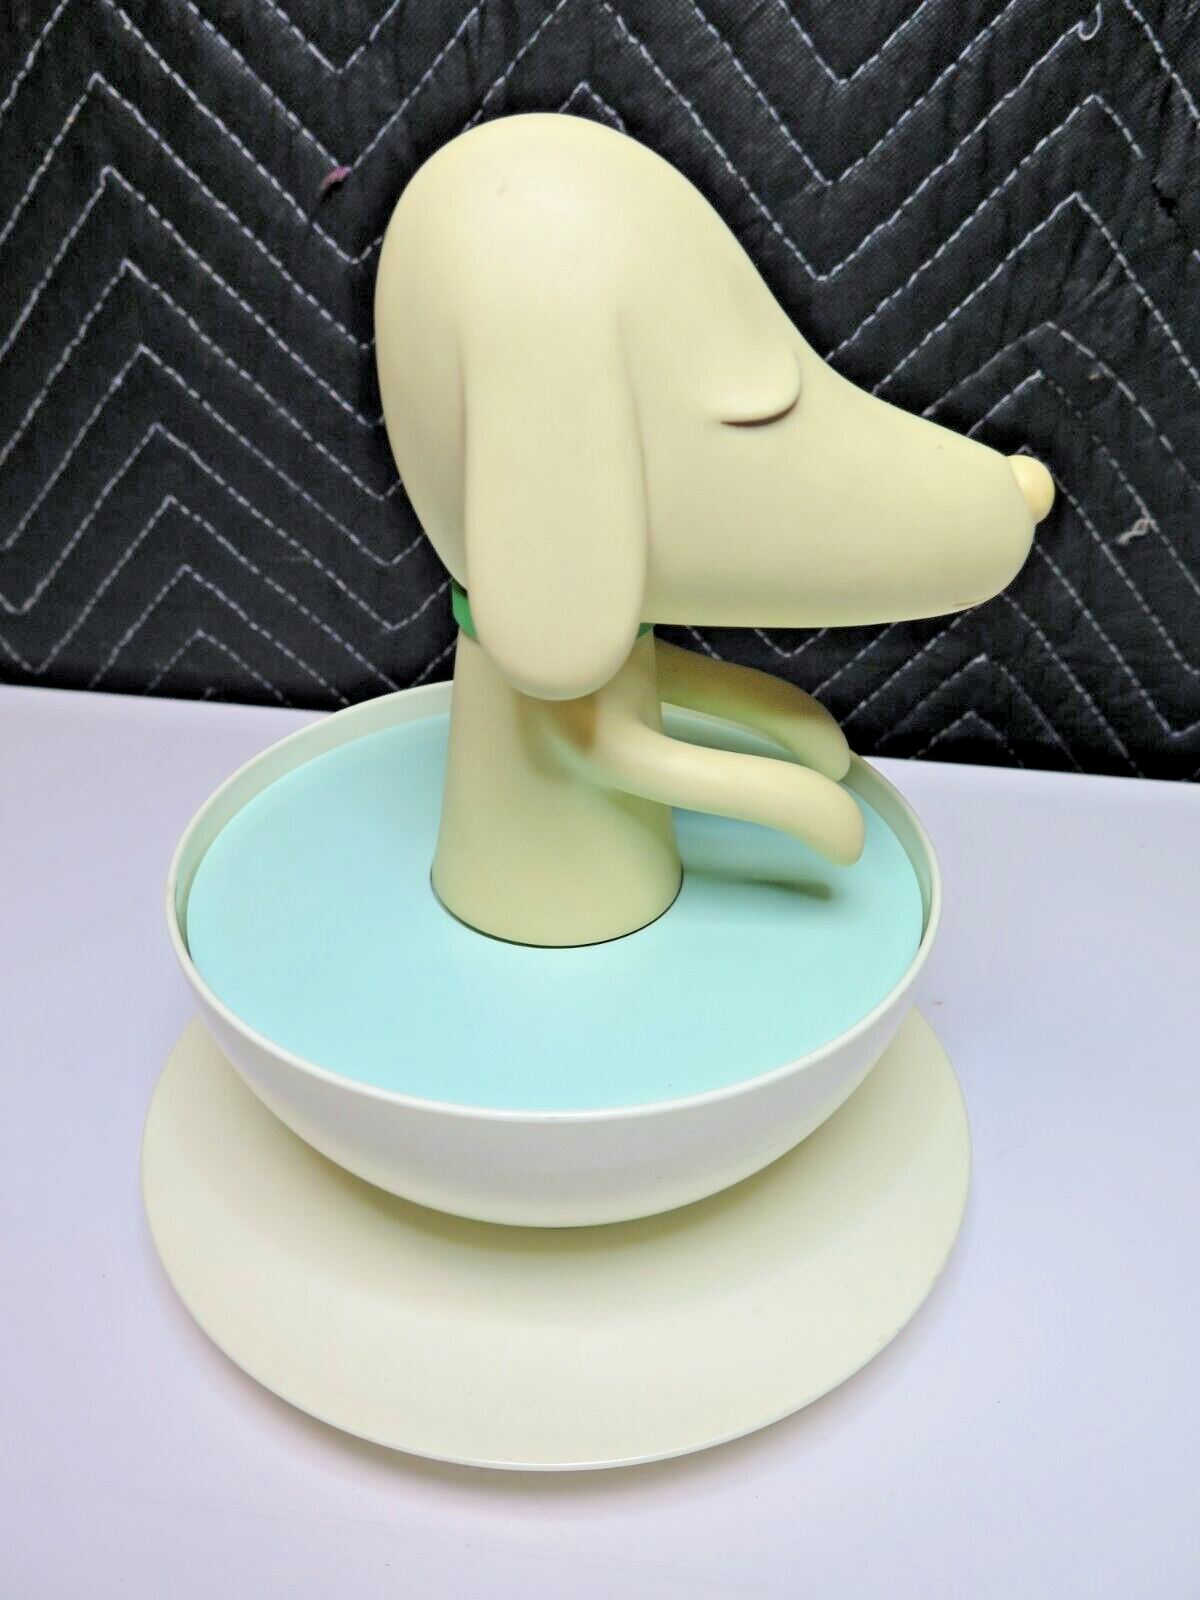 Yoshitomo Nara Pup Cup Urban Vinyl Cerealart Kidrobot Battery Operated RARE